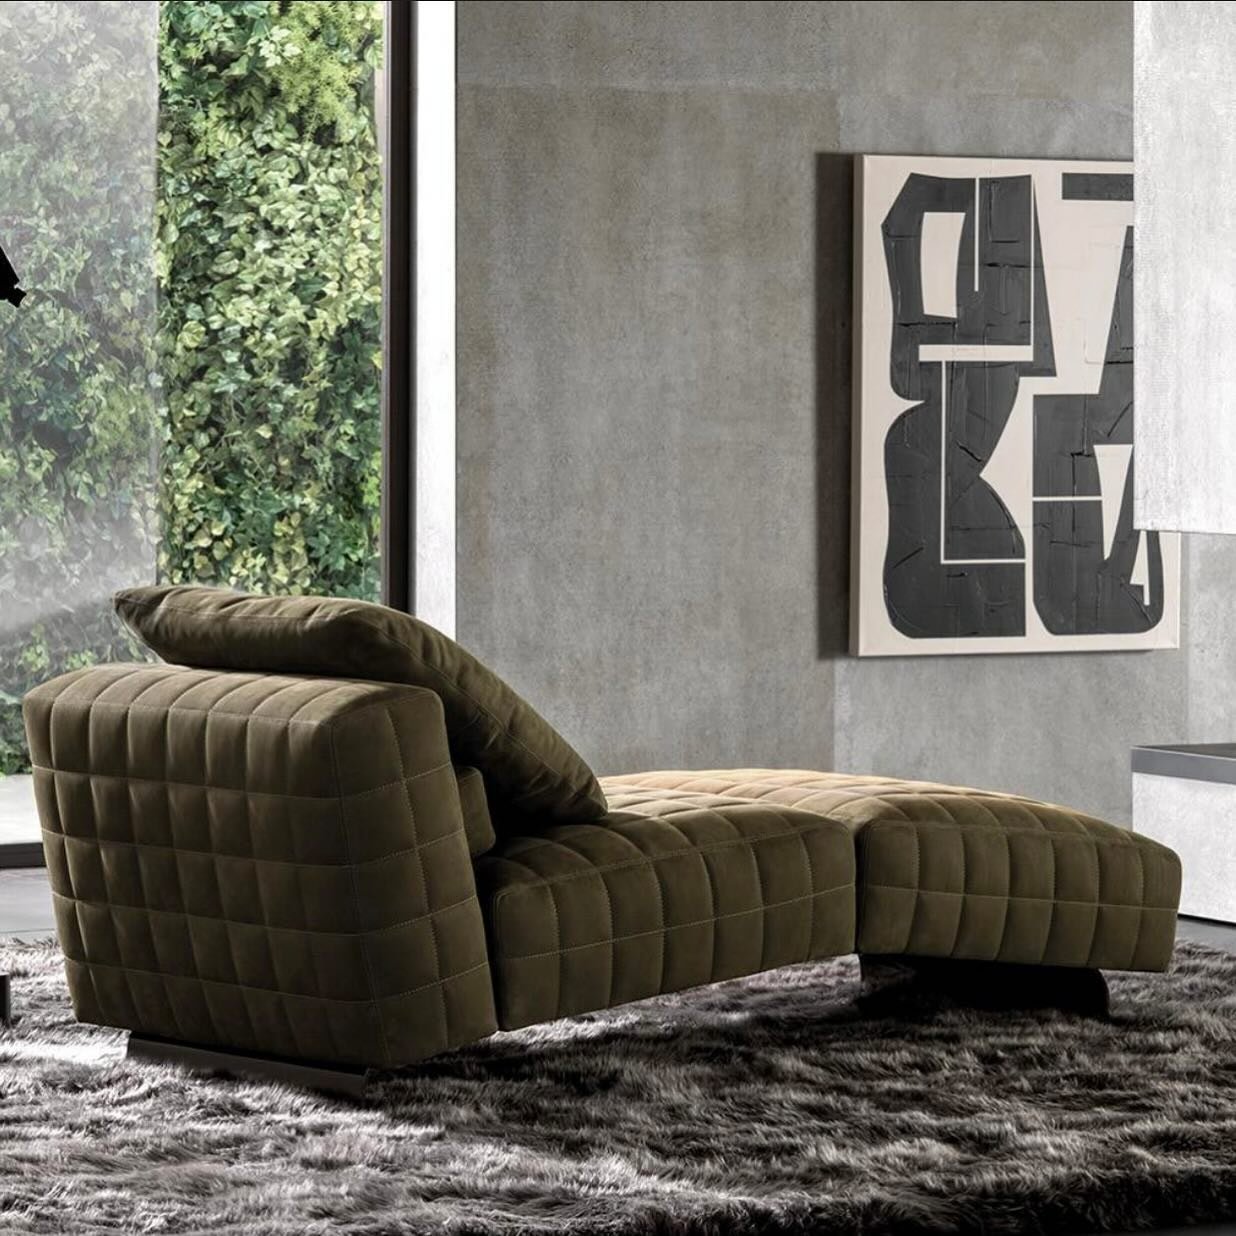 Minotti, Twiggy Chaise Longue

#minotti #minottifurniture #chaiselongue #livingroomdecor #interiordesign #interiorinspiration #luxuryhomes